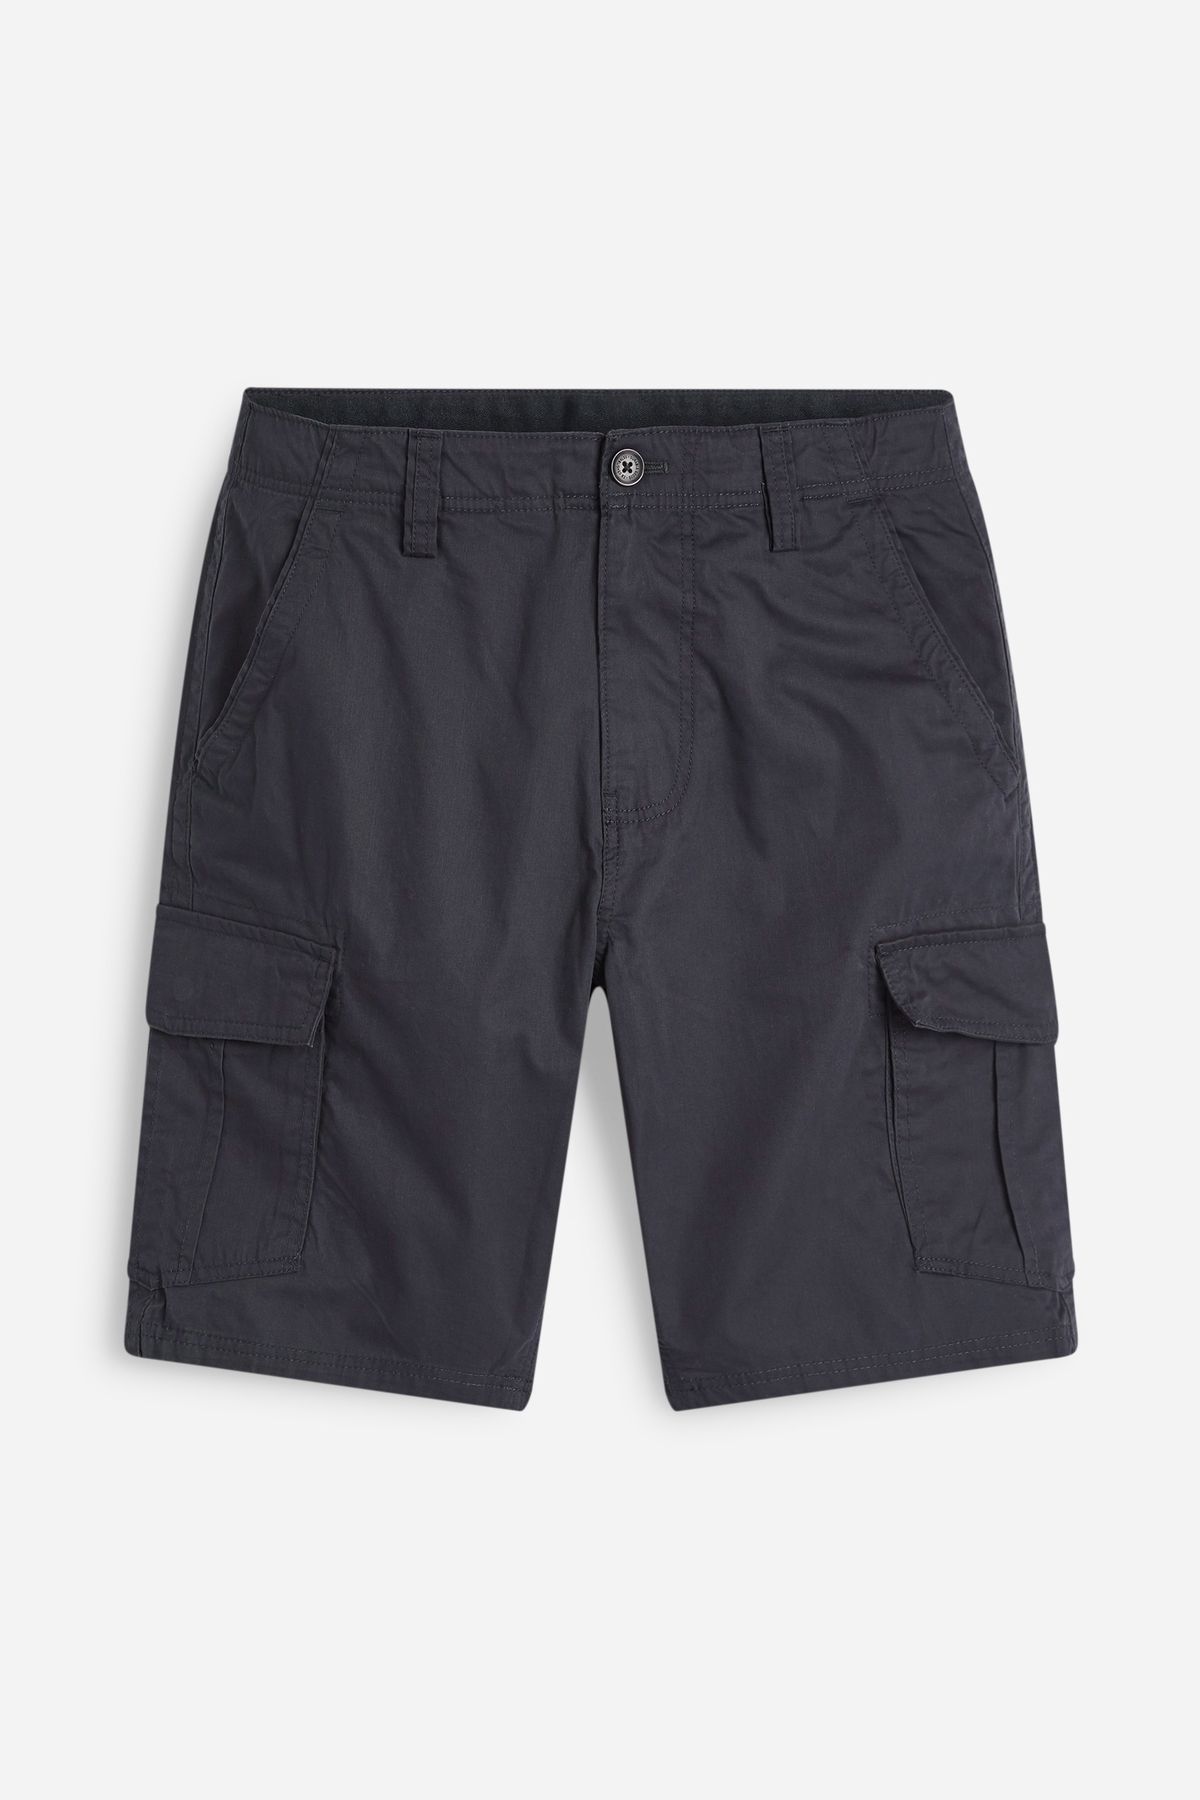 NEXT Navy Cotton Cargo Shorts Men Shorts